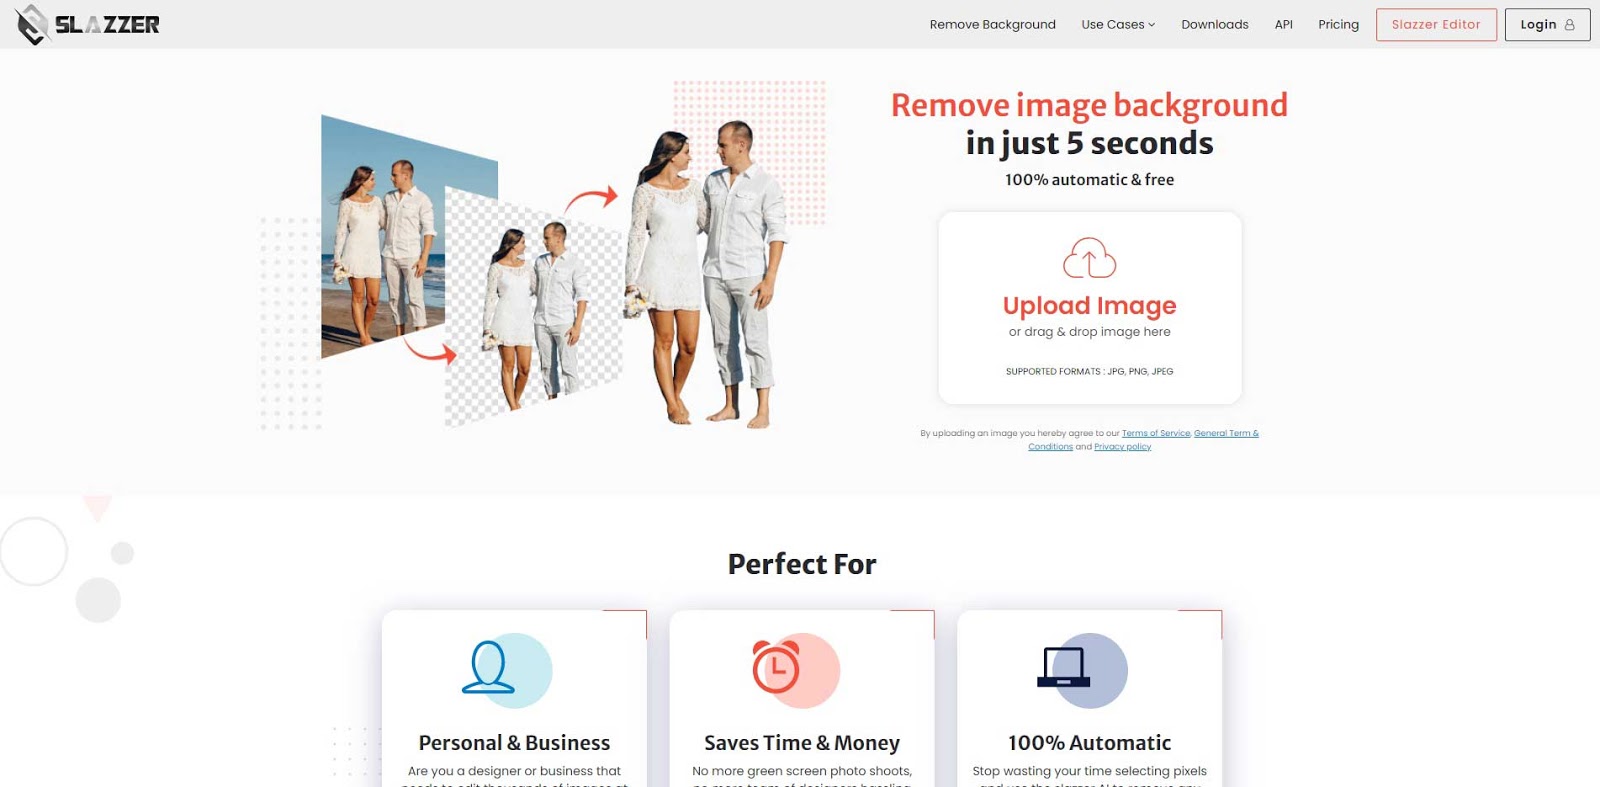 Situs menghilangkan background foto online otomatis terbaik : 2. Adobe Photoshop Express Online